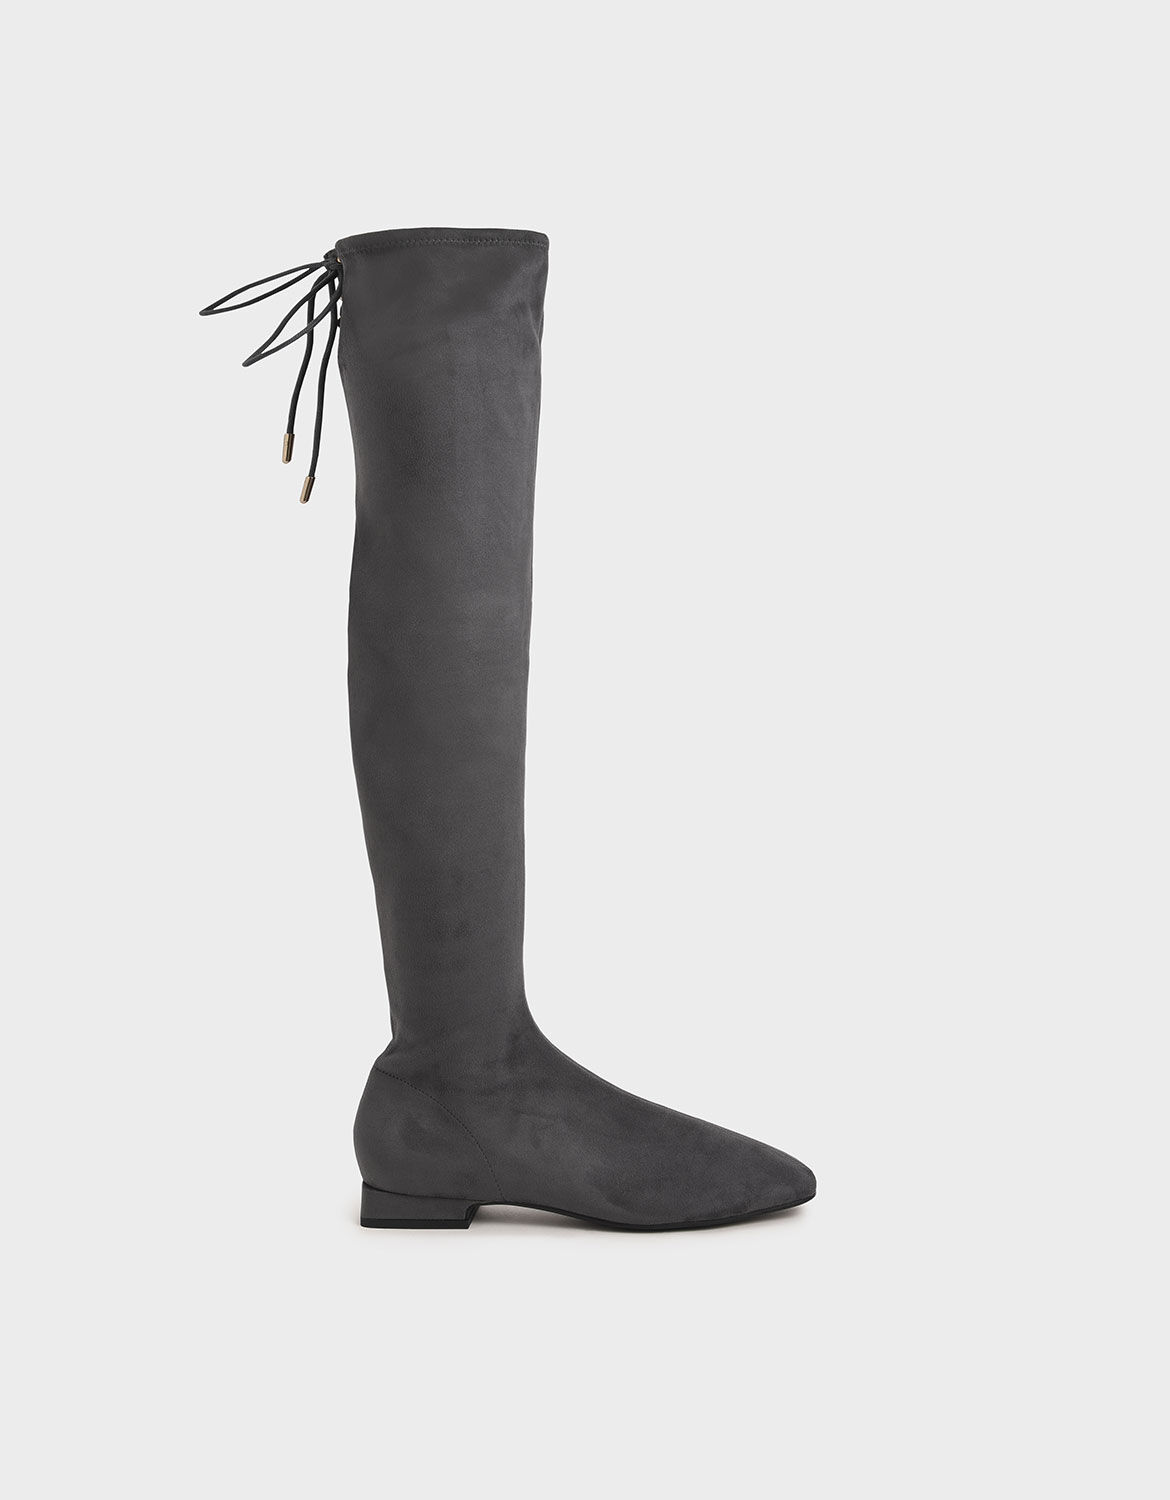 Shop Women's Over-the-Knee Boots Online 